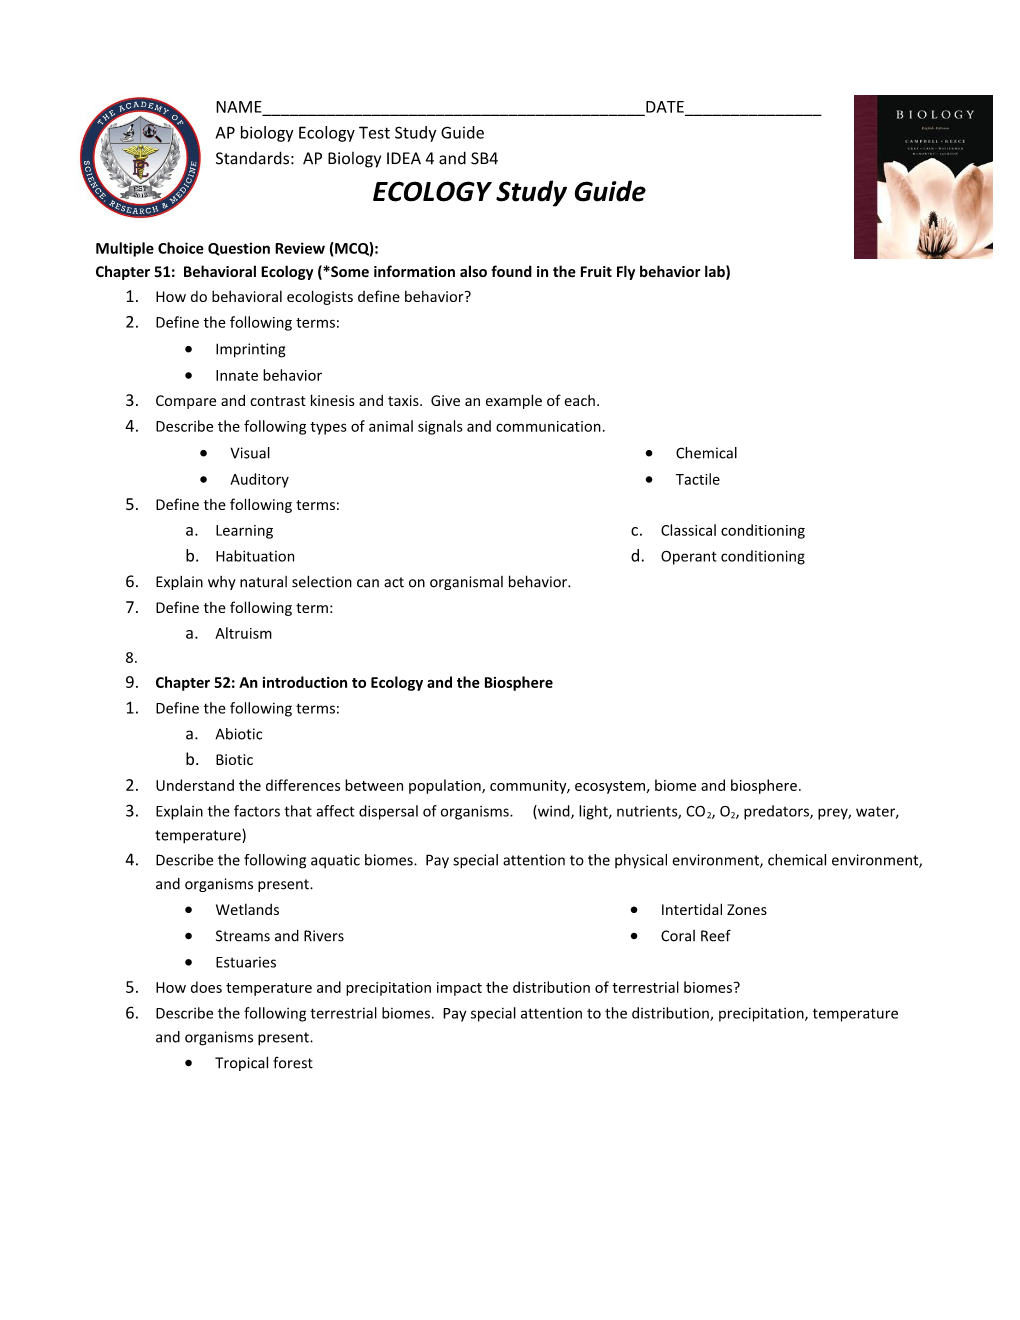 AP Biology Ecology Test Study Guide